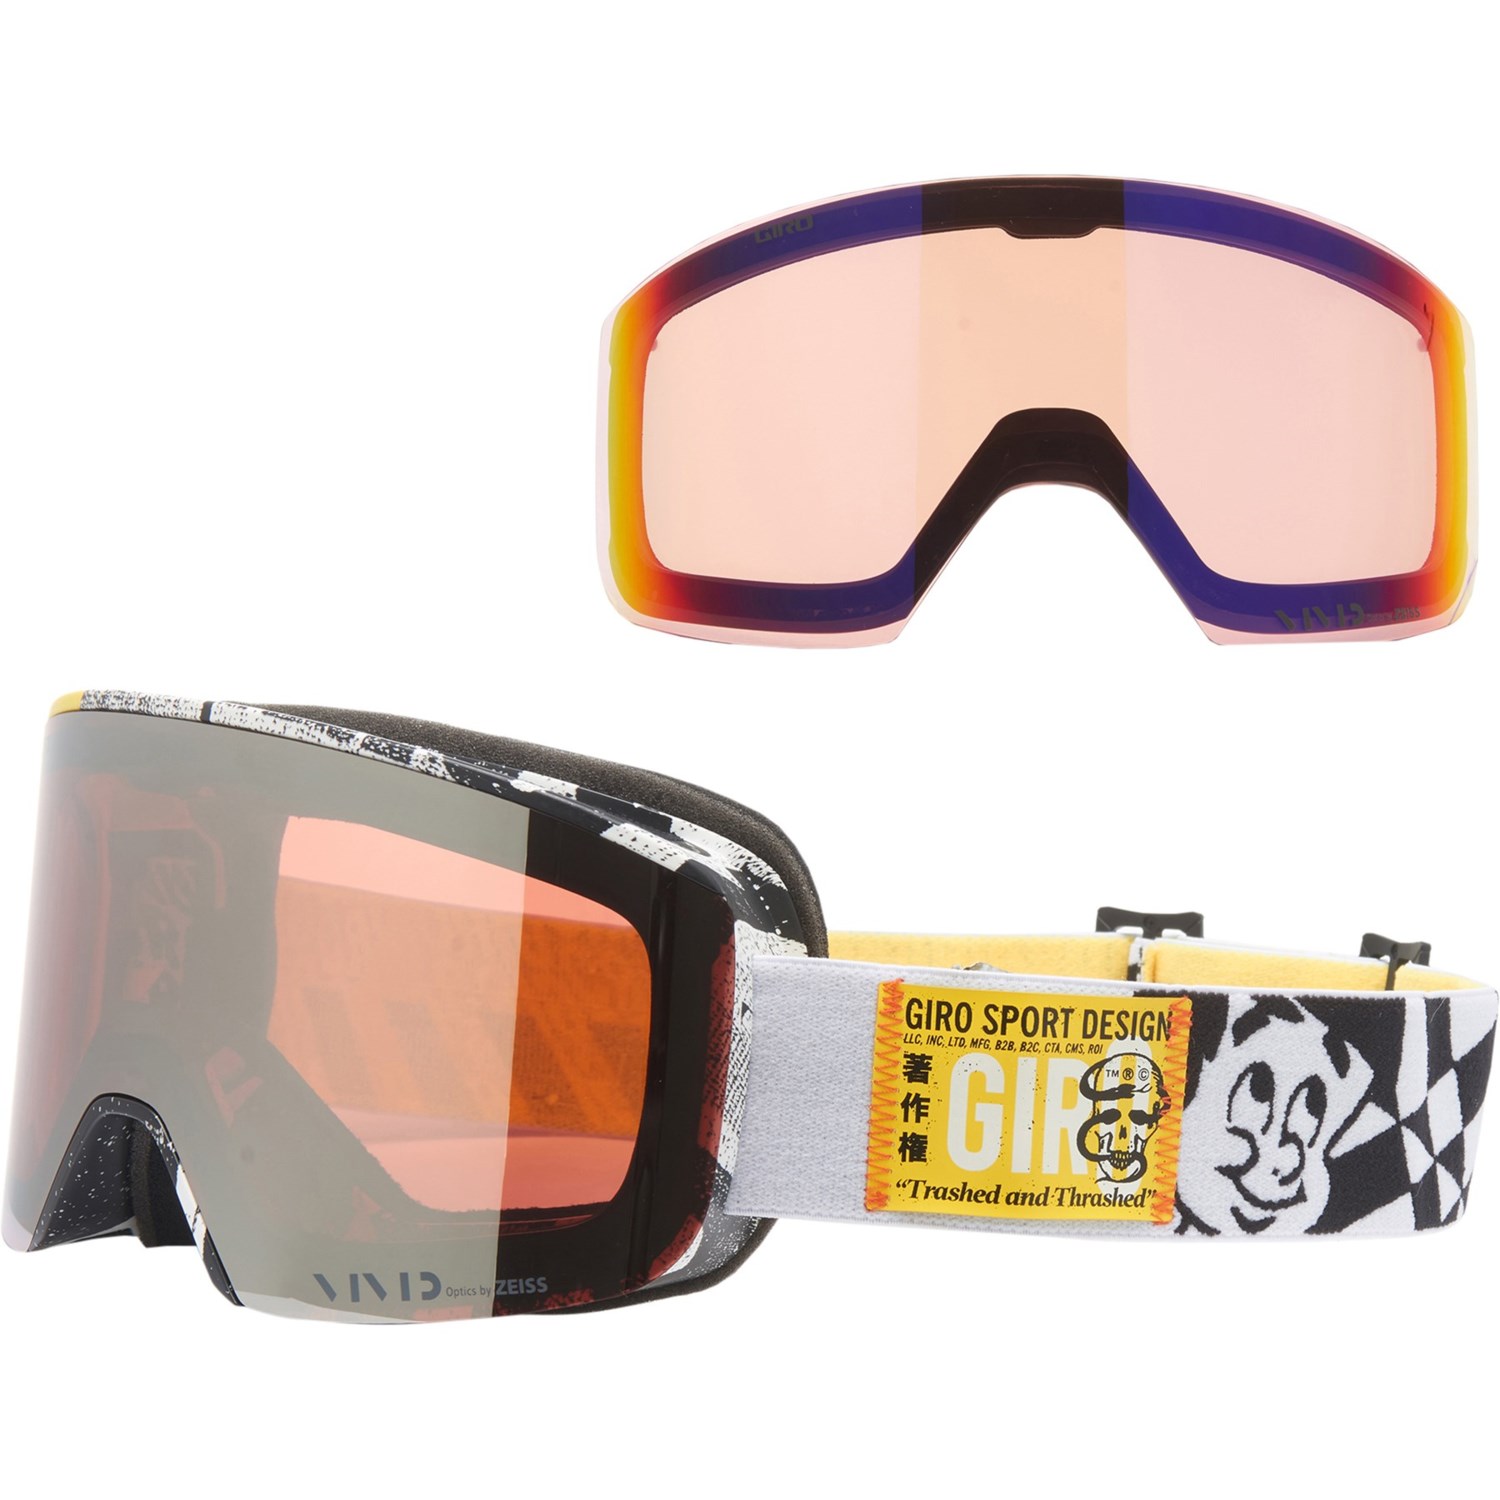 Giro Axis Ski Goggles (For Men) - Save 41%